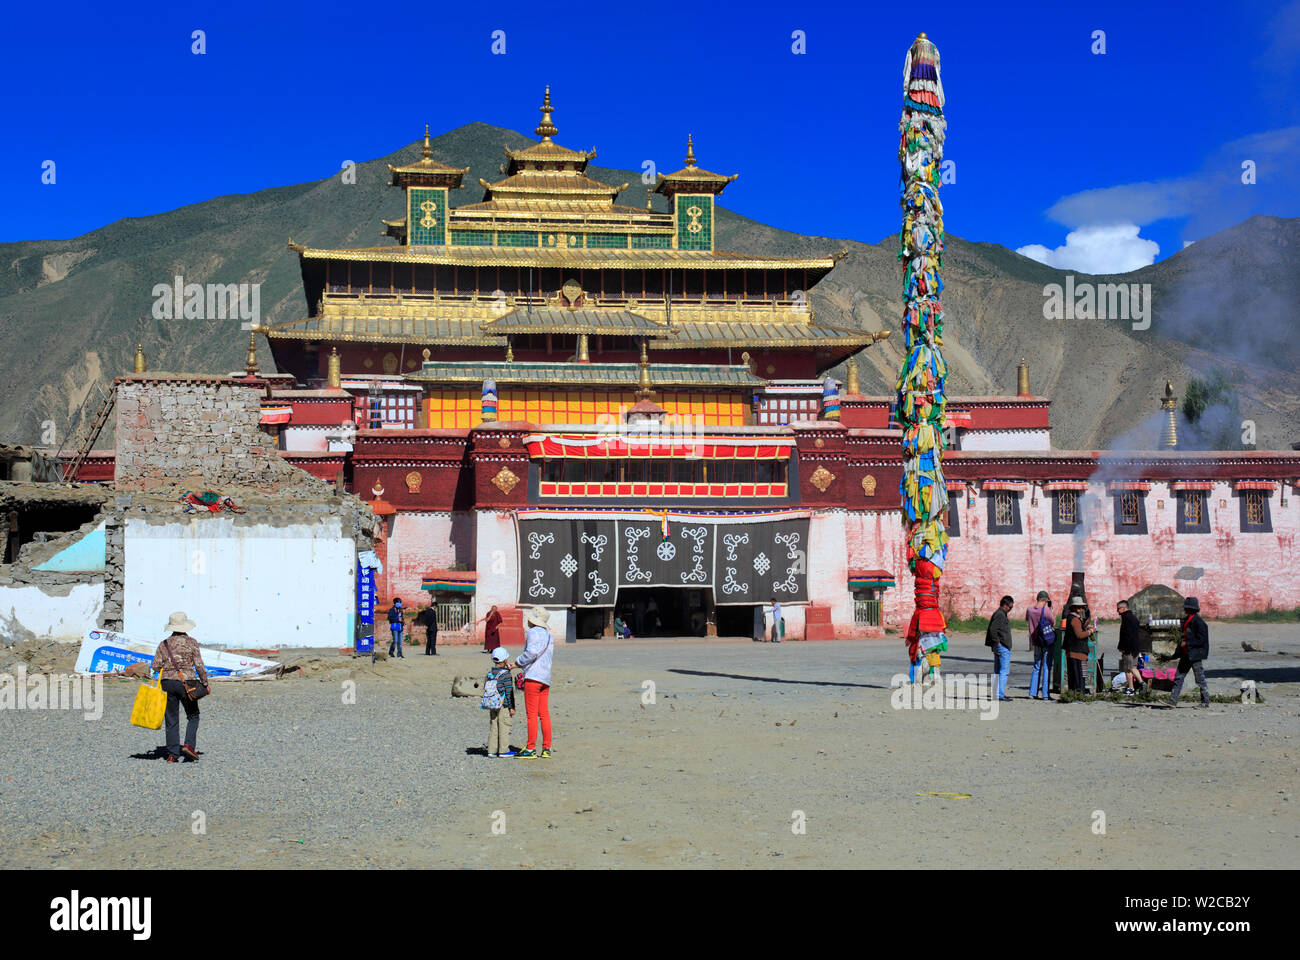 Utse temple, Samye Monastery (Samye Gompa), Dranang, Shannan Prefecture, Tibet, China Stock Photo